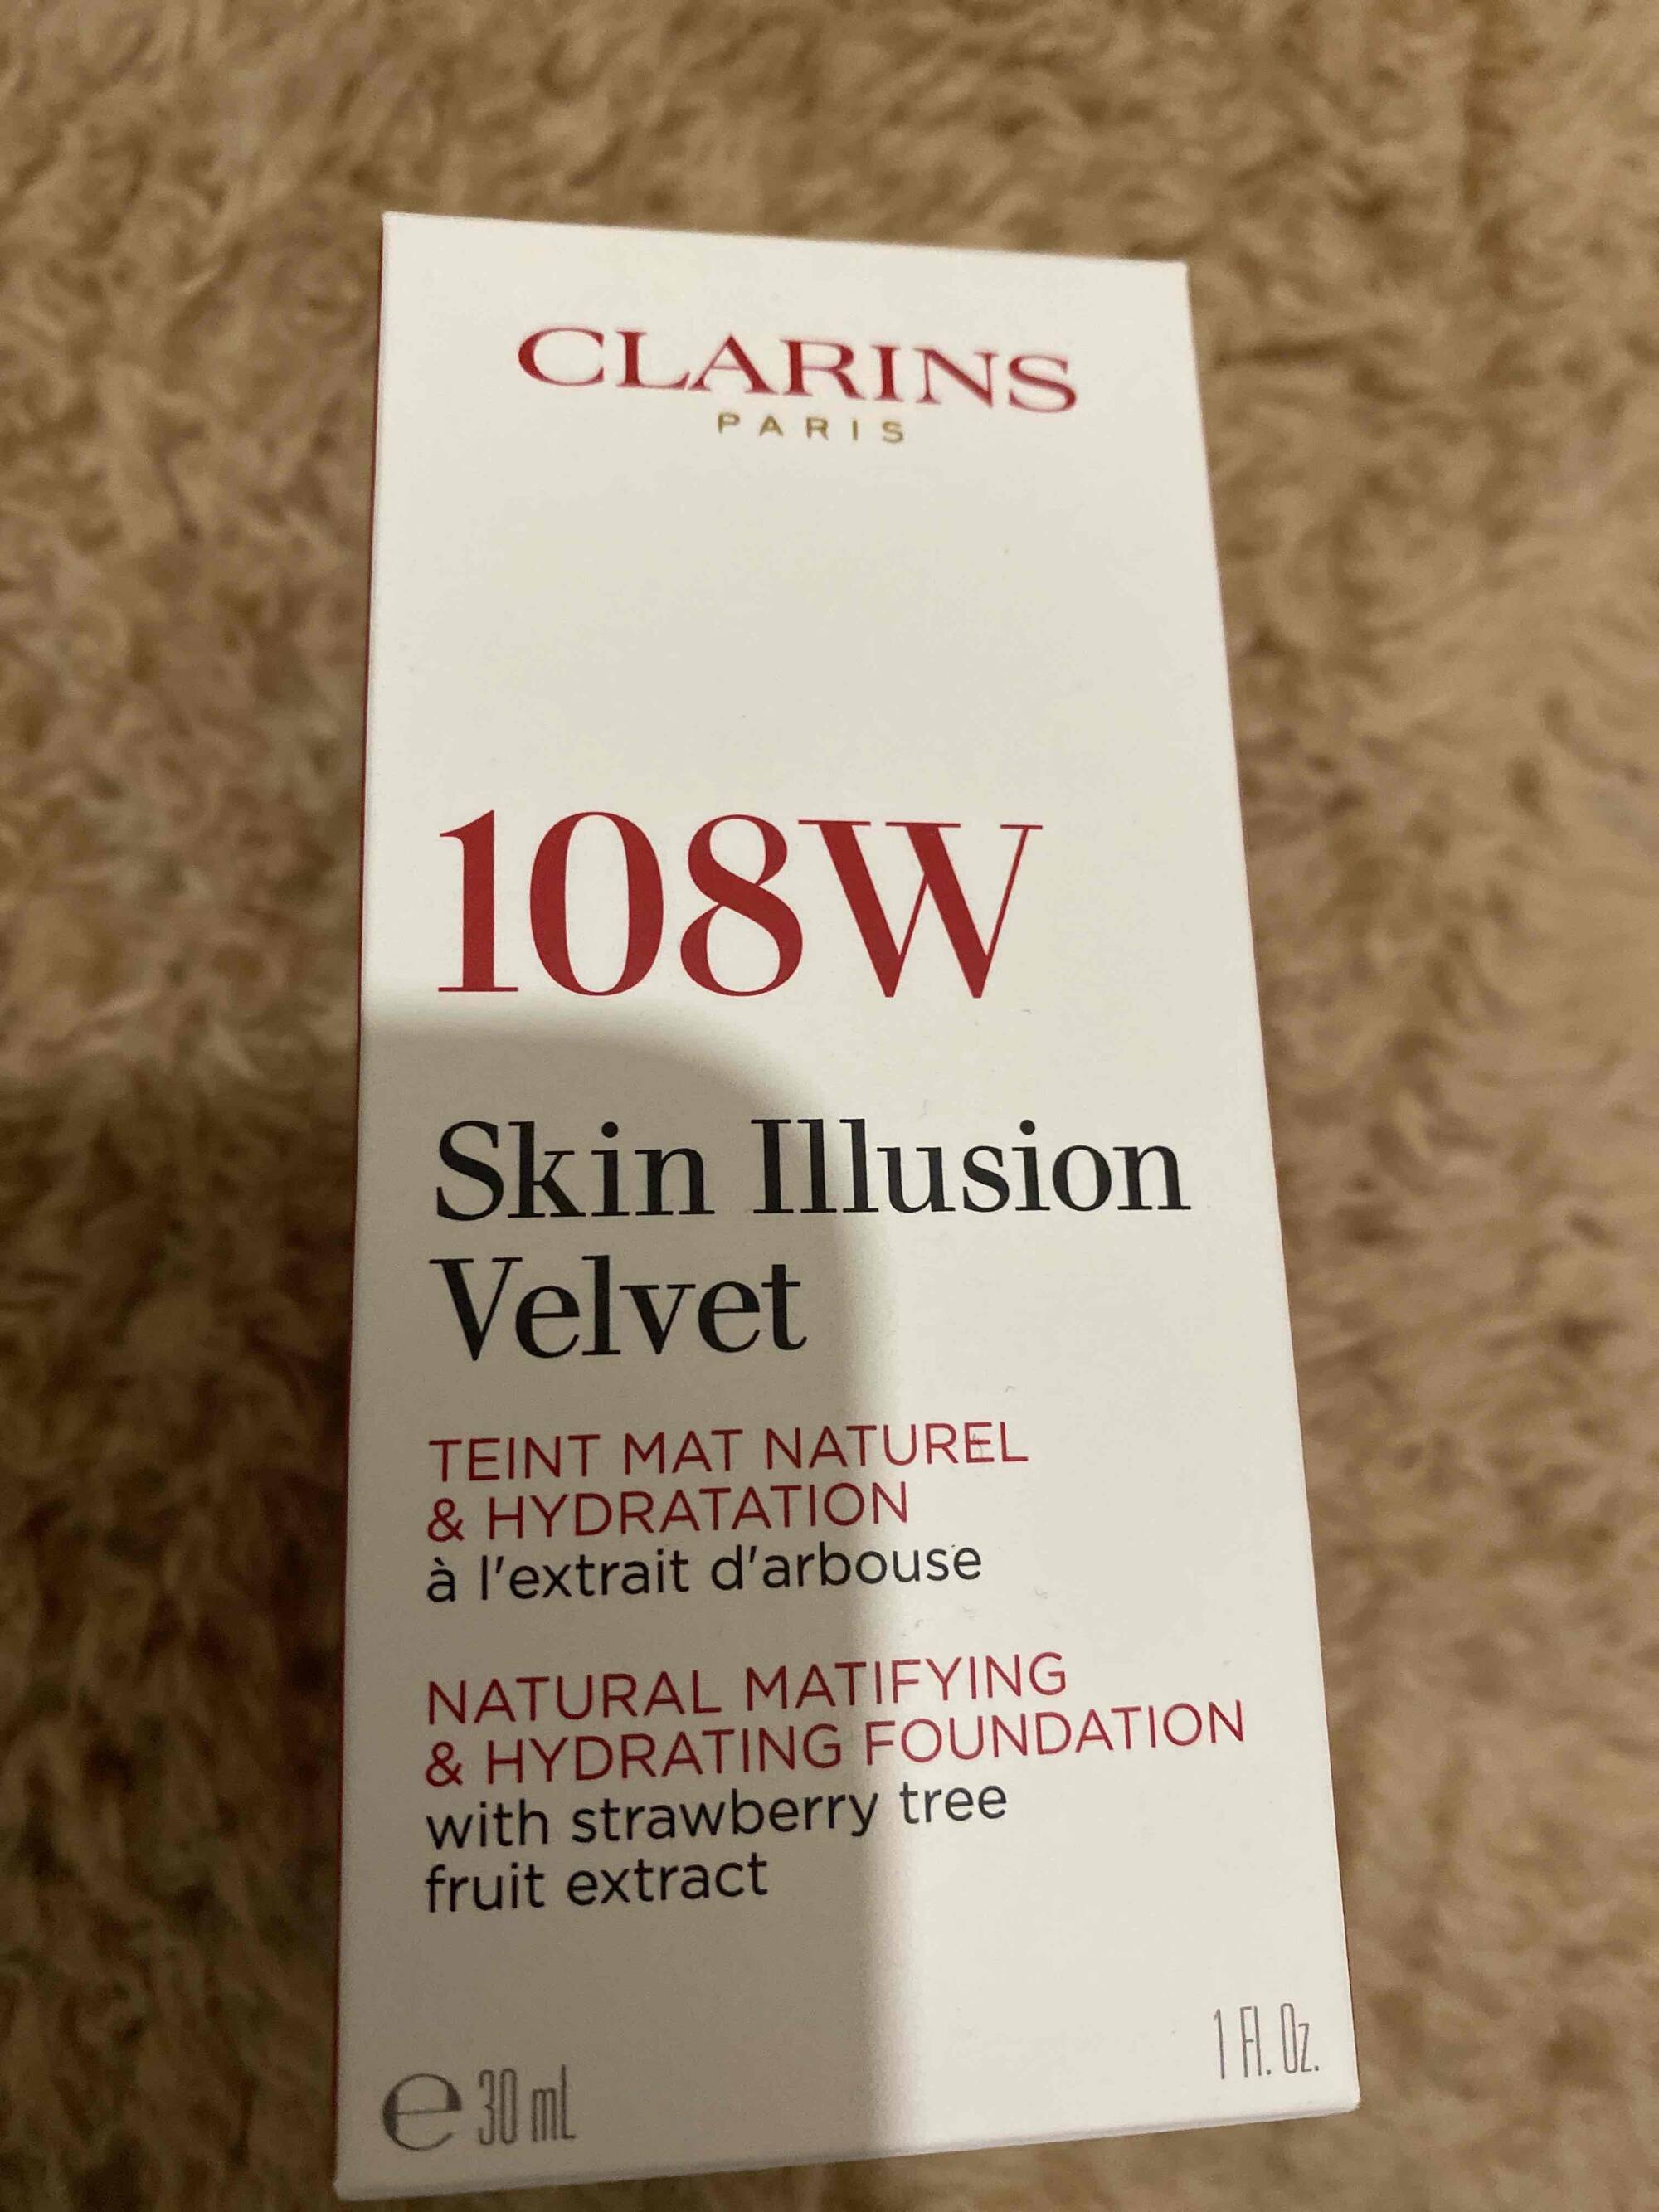 CLARINS - 108W skin illusion velvet - Teint mat naturel & hydratation